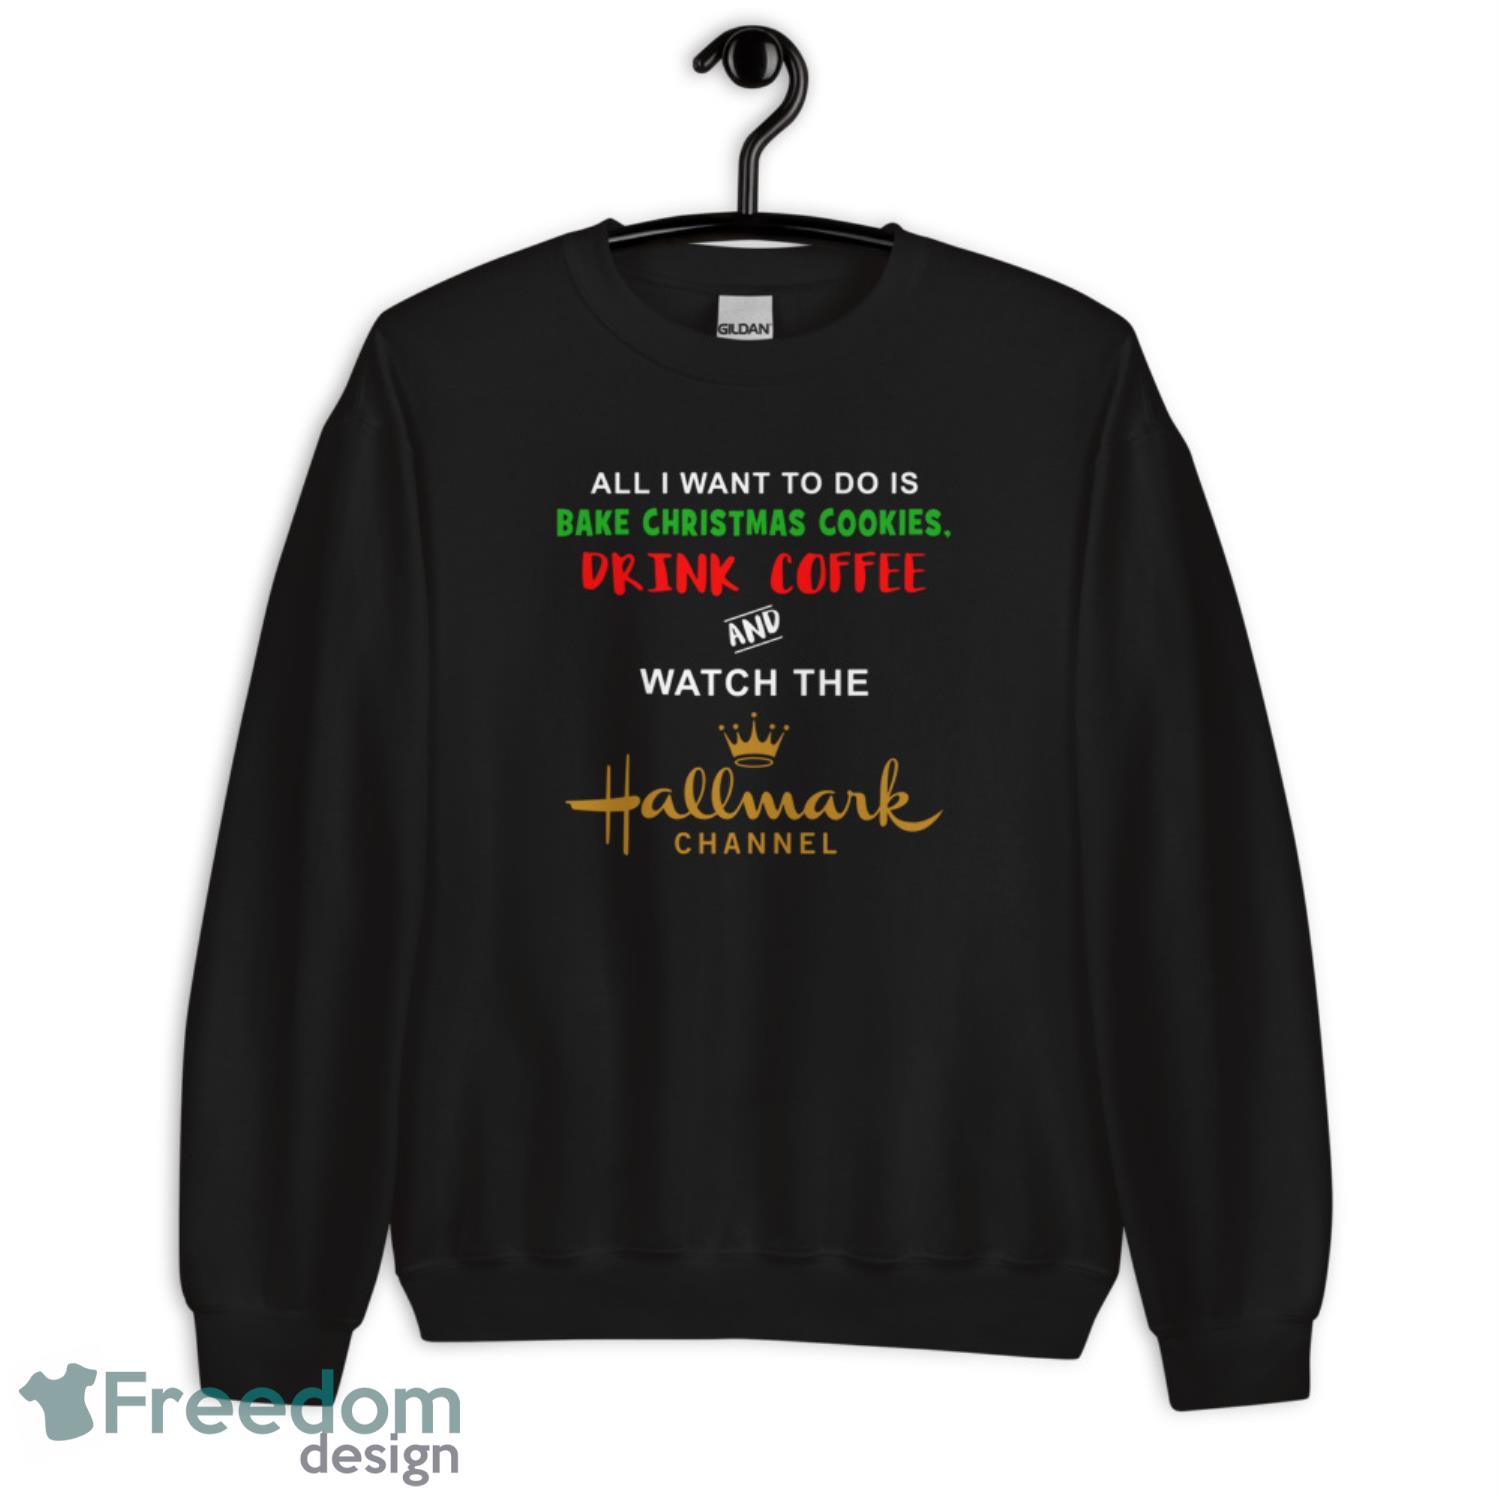 All I Want To Do Is Bake Christmas Cookies And Watch The Hallmark Christmas Sweater - G185 Crewneck Sweatshirt